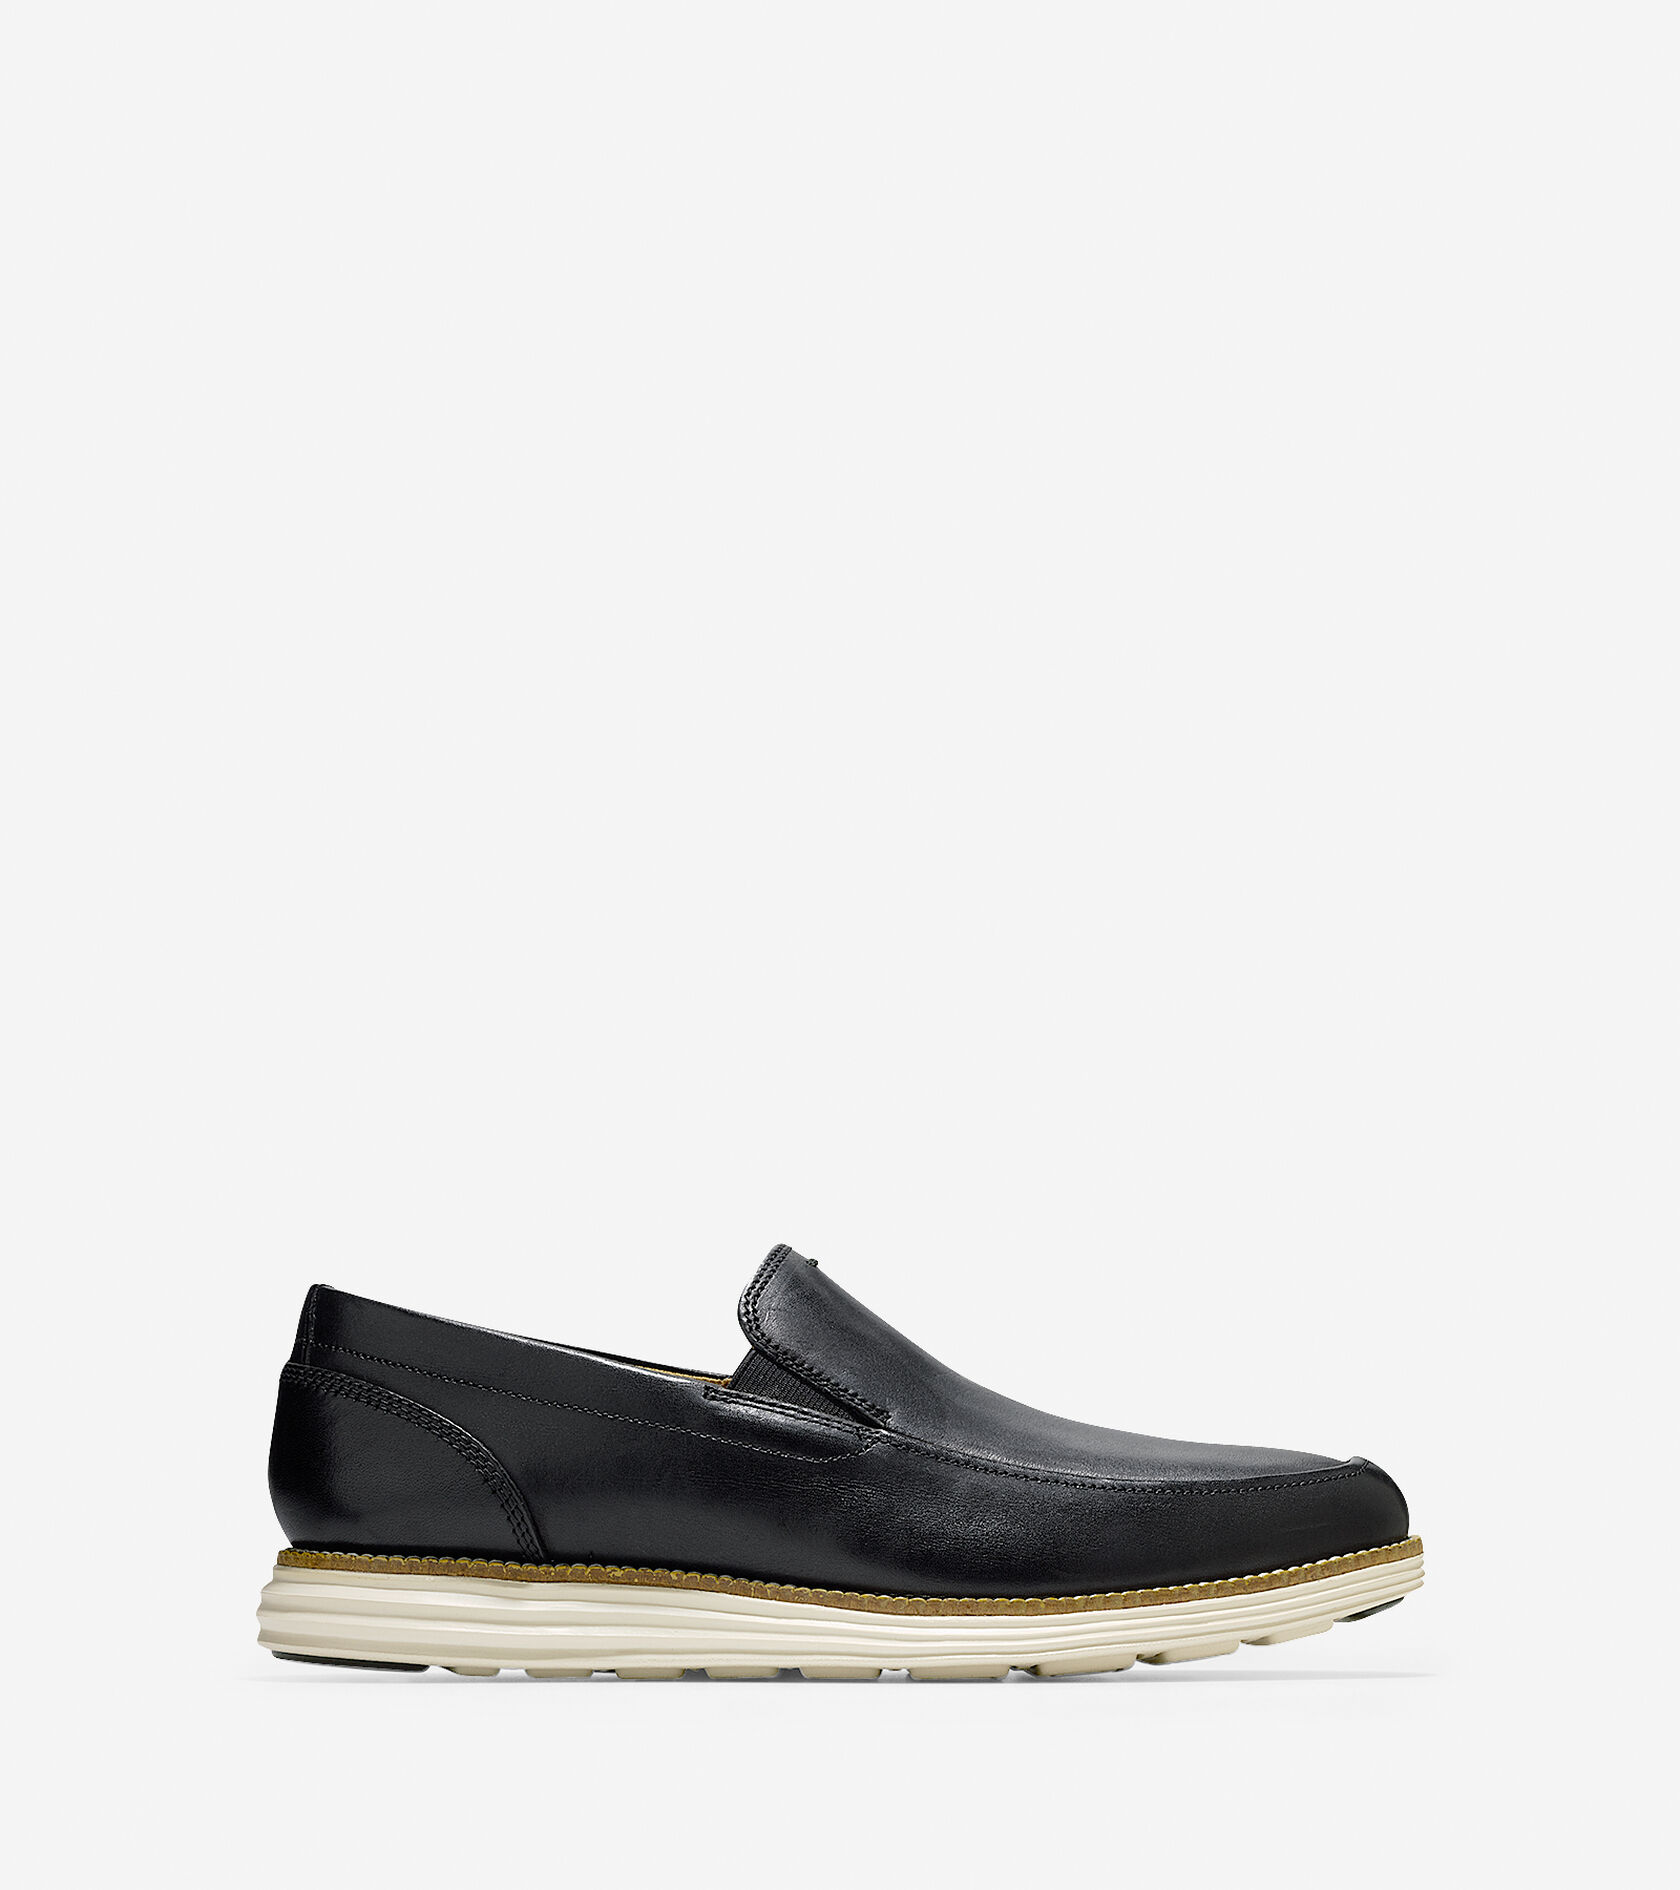 OriginalGrand Venetian Loafers in Black-White | Cole Haan